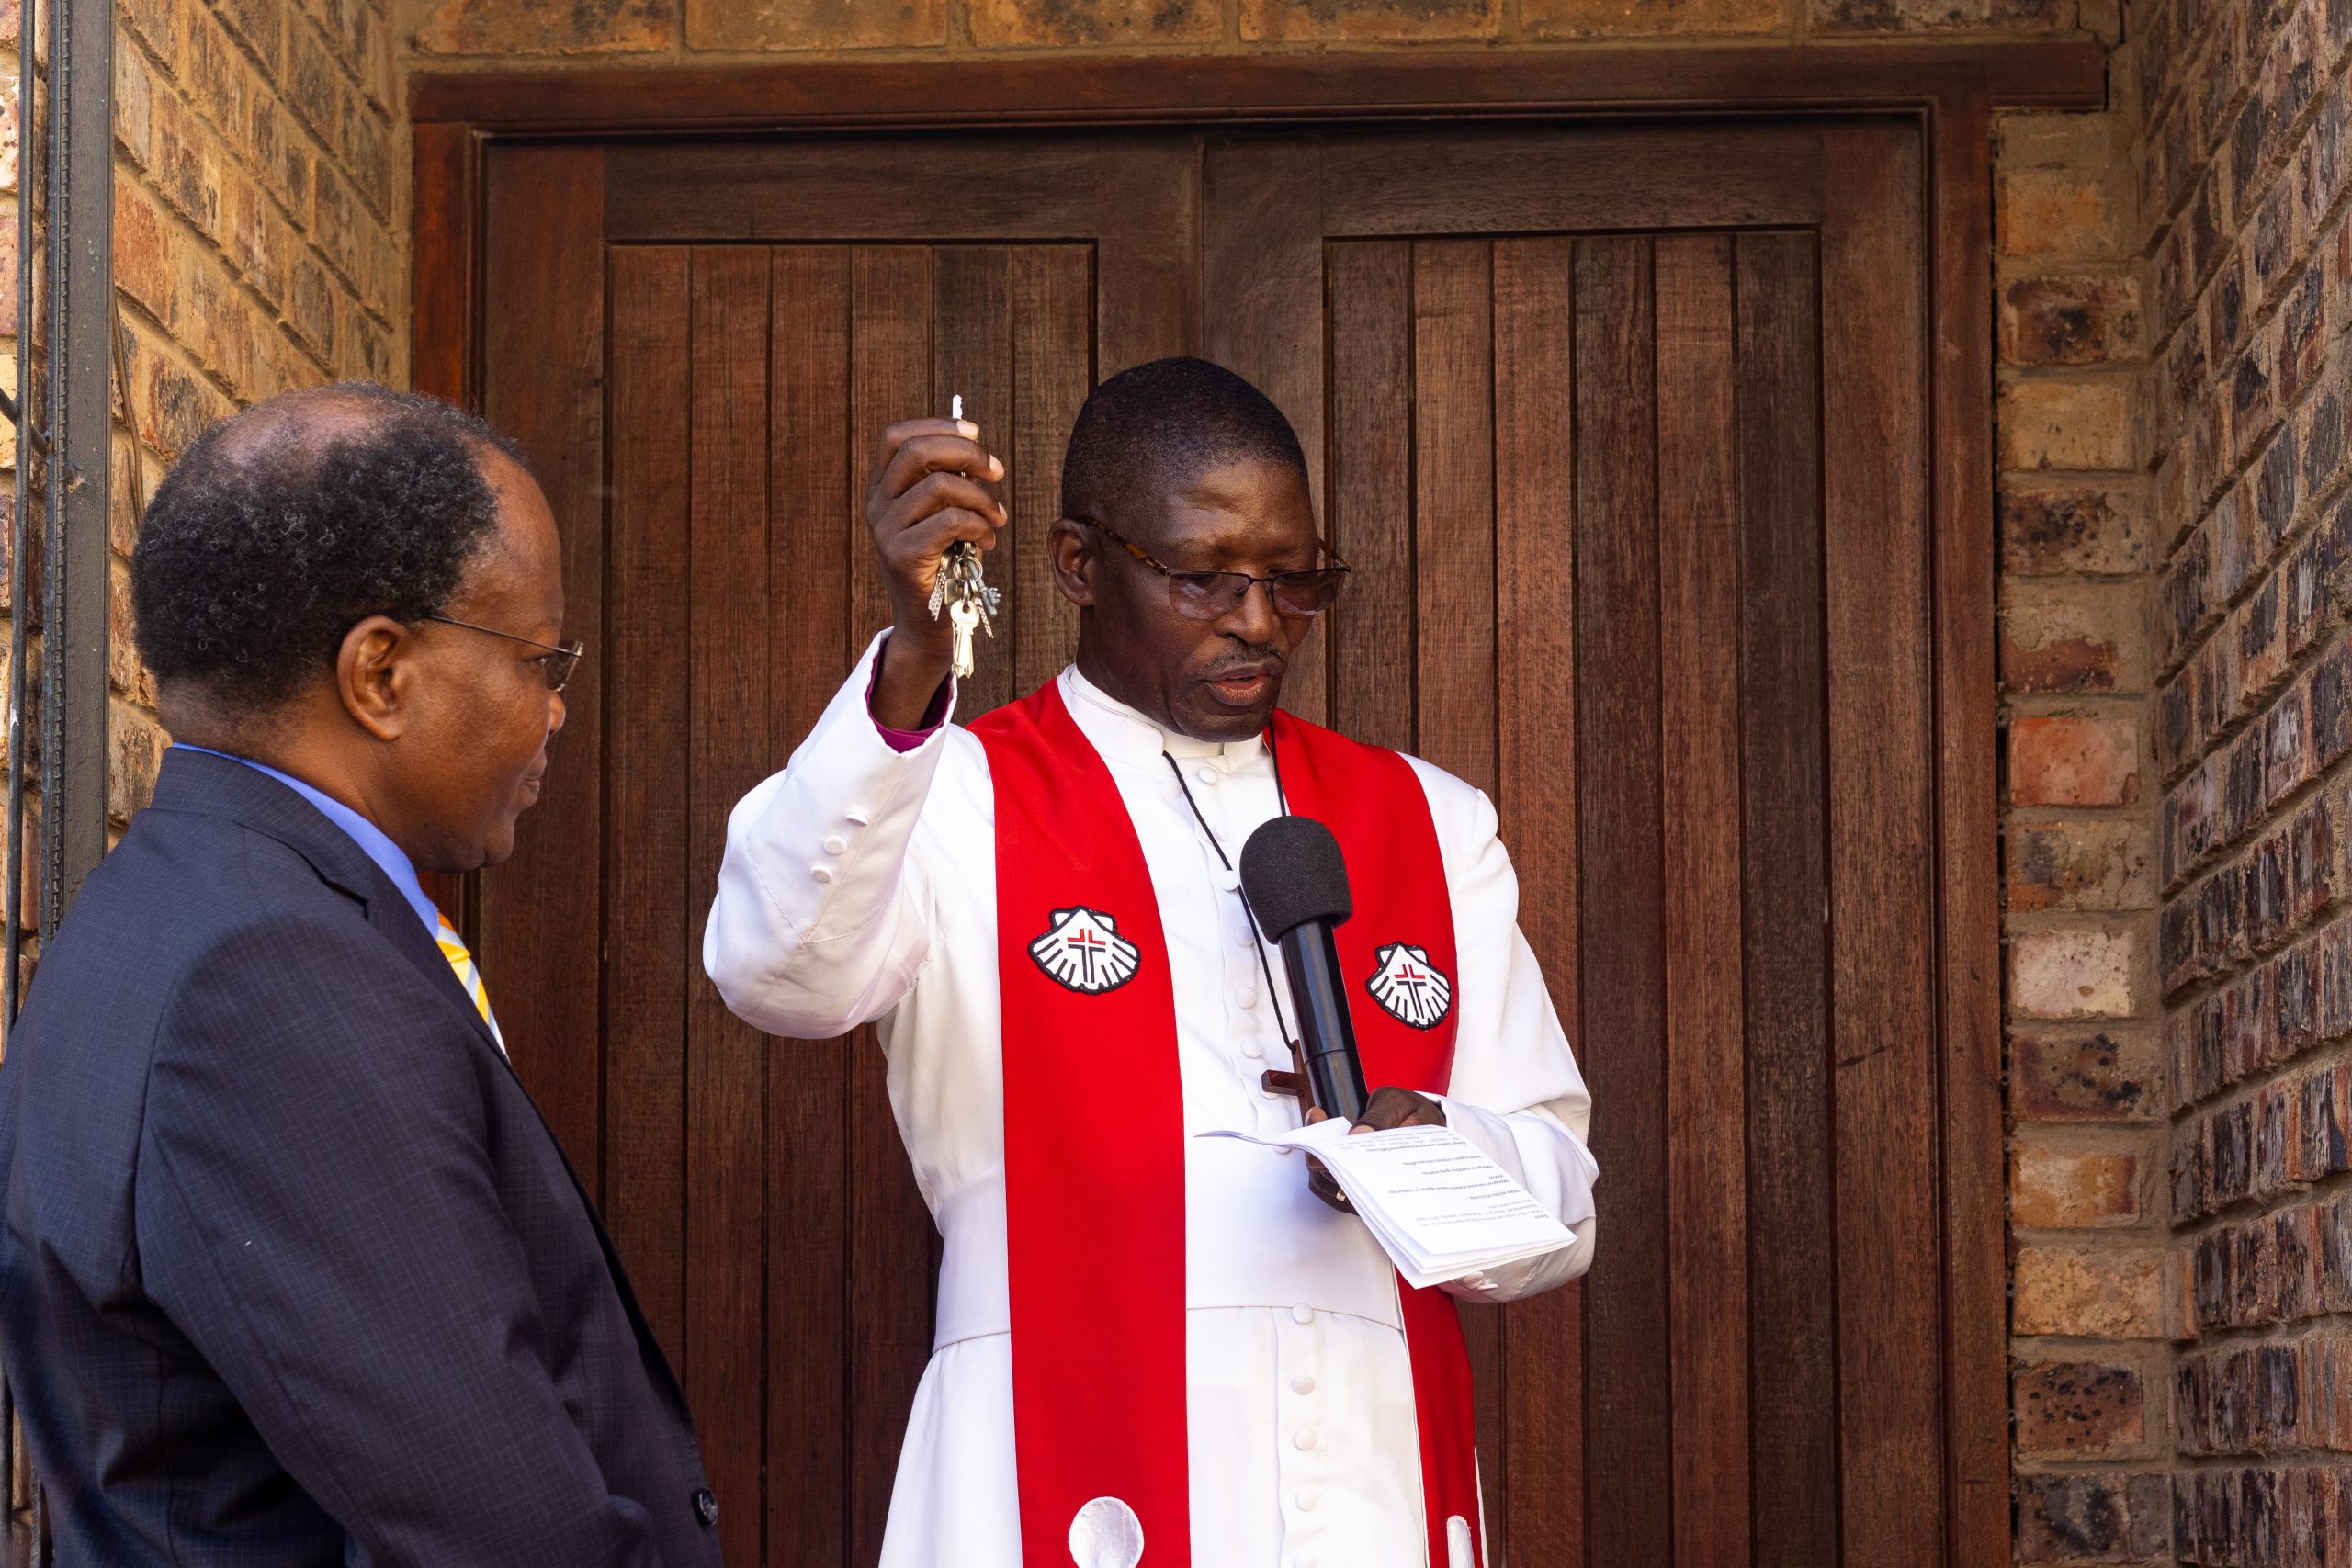 Bishop Dr. Msokoli William Leleki blessing the hall after the unveiling the new Mluleki Raymond Ndabeni Hall photo by RIkie Lai